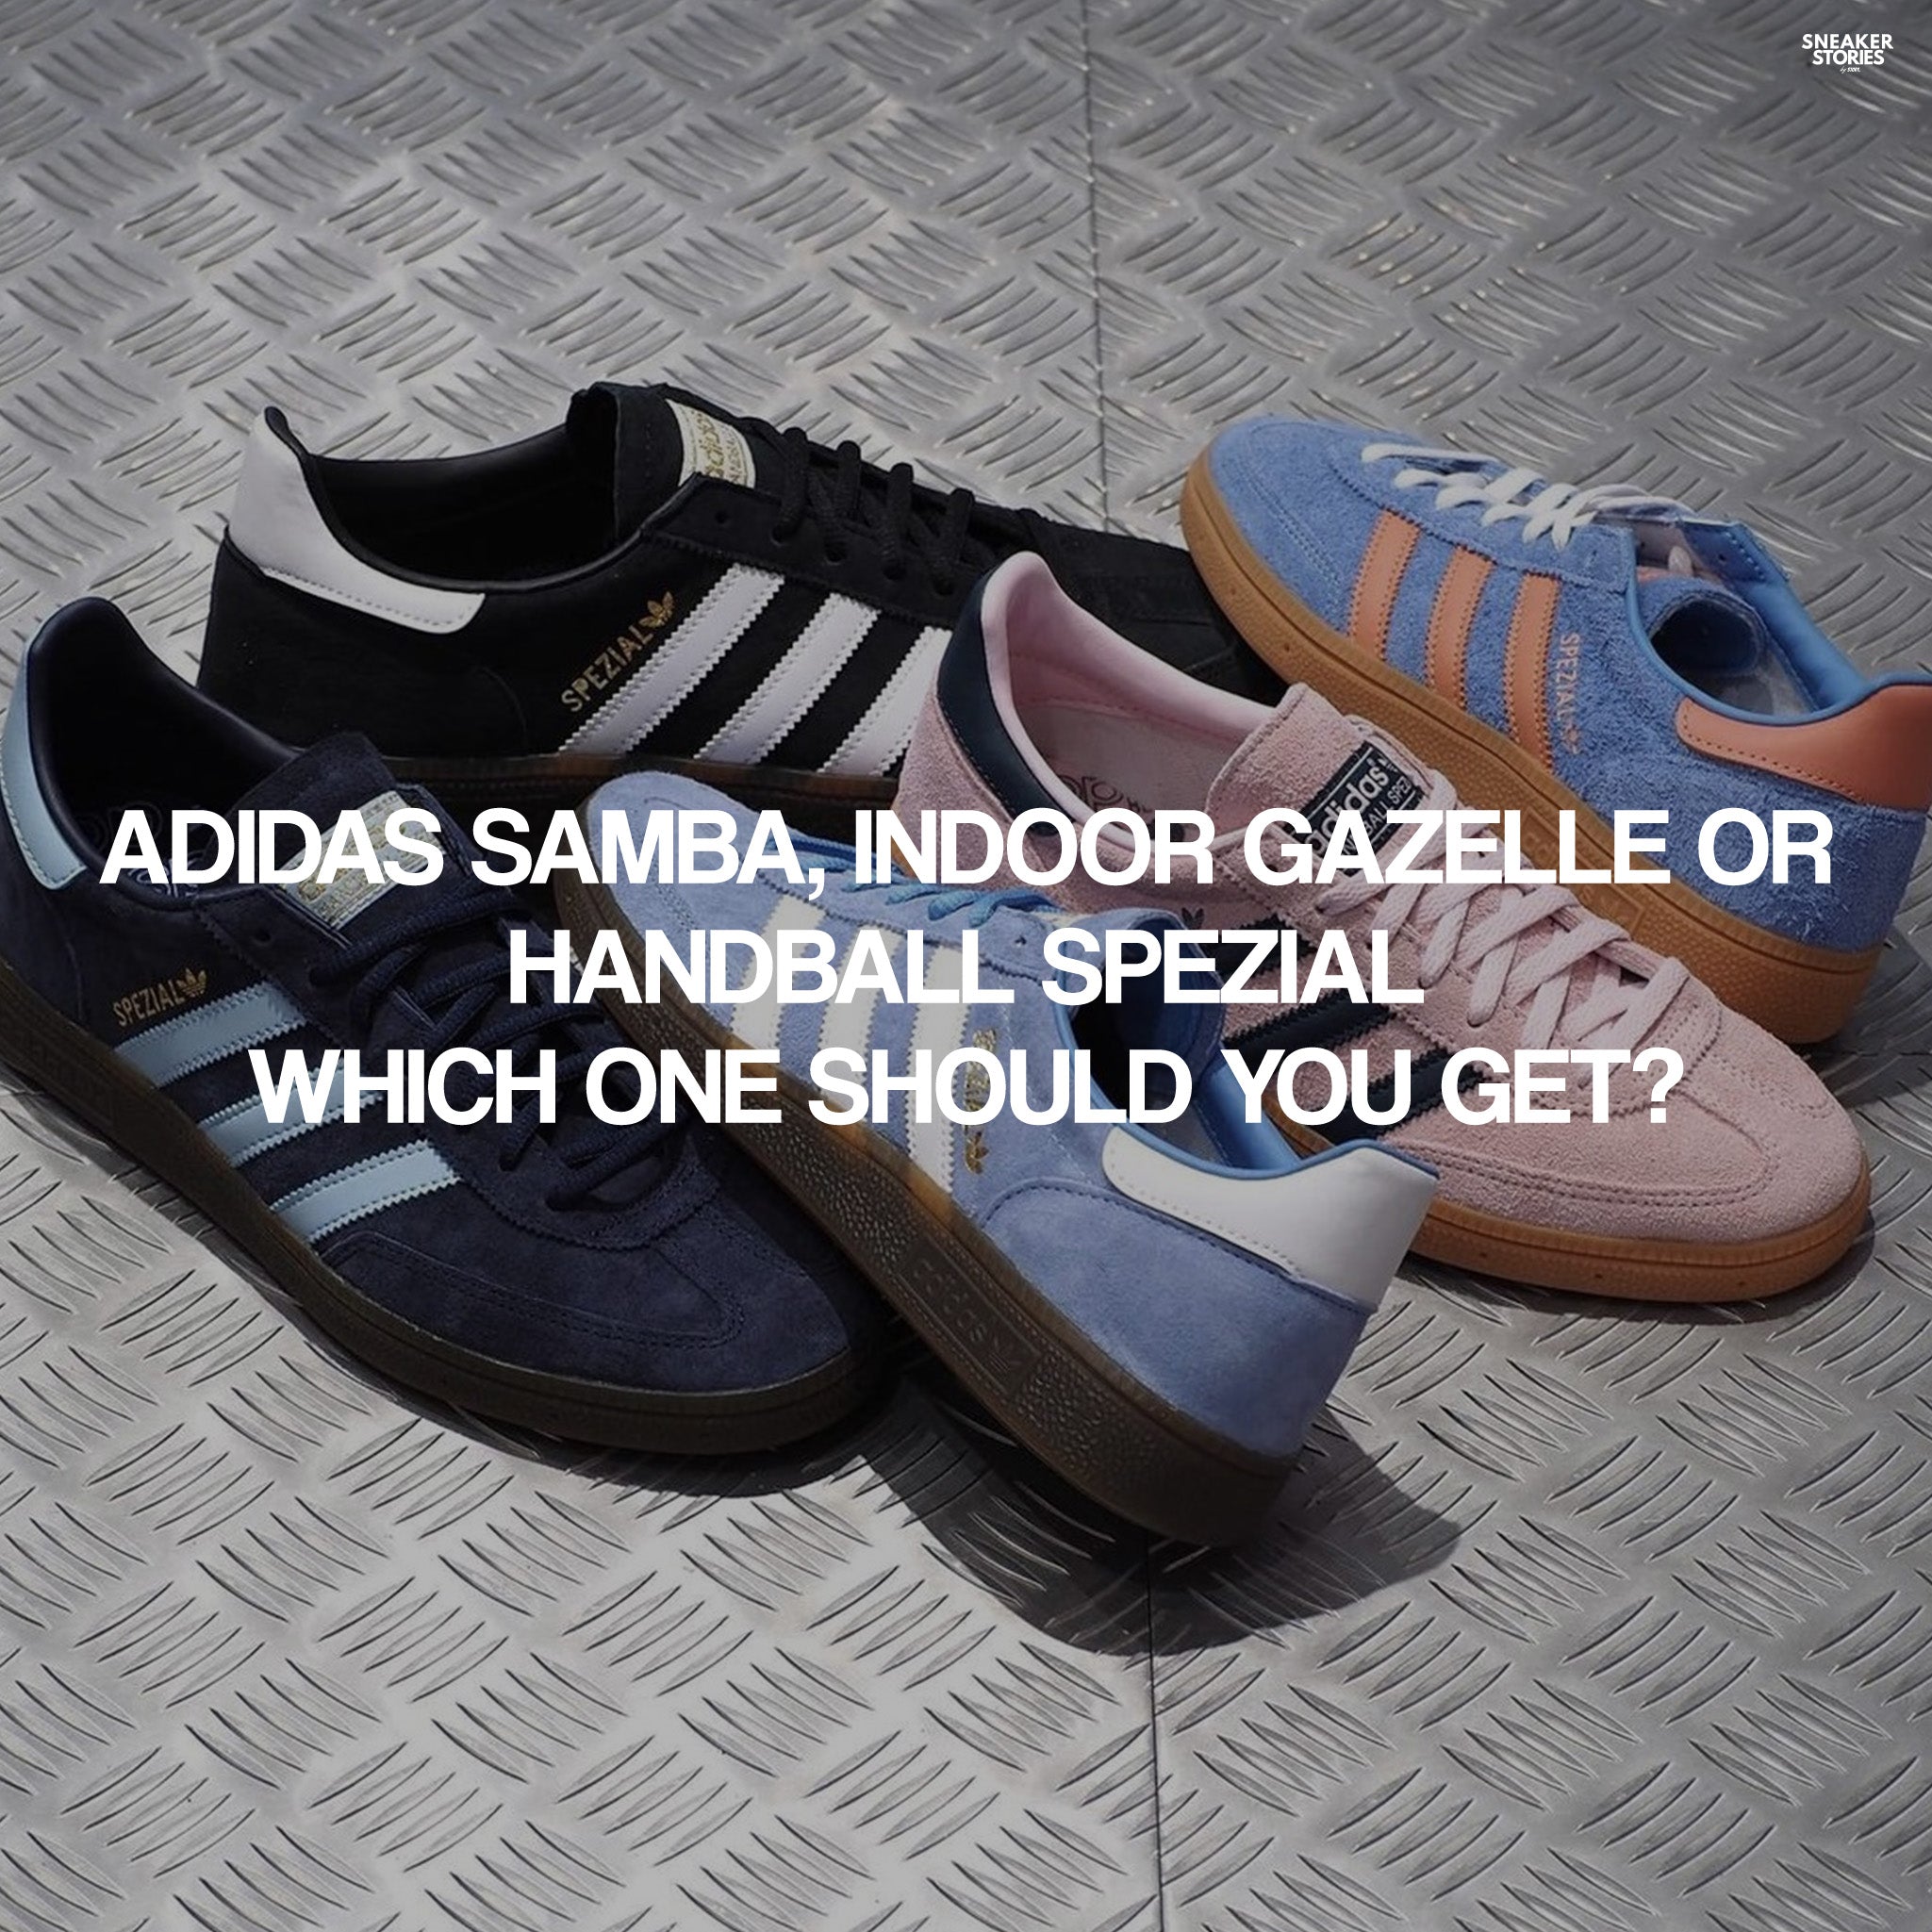 Adidas Samba, Indoor Gazelle or Handball Spezial Which one should you get?